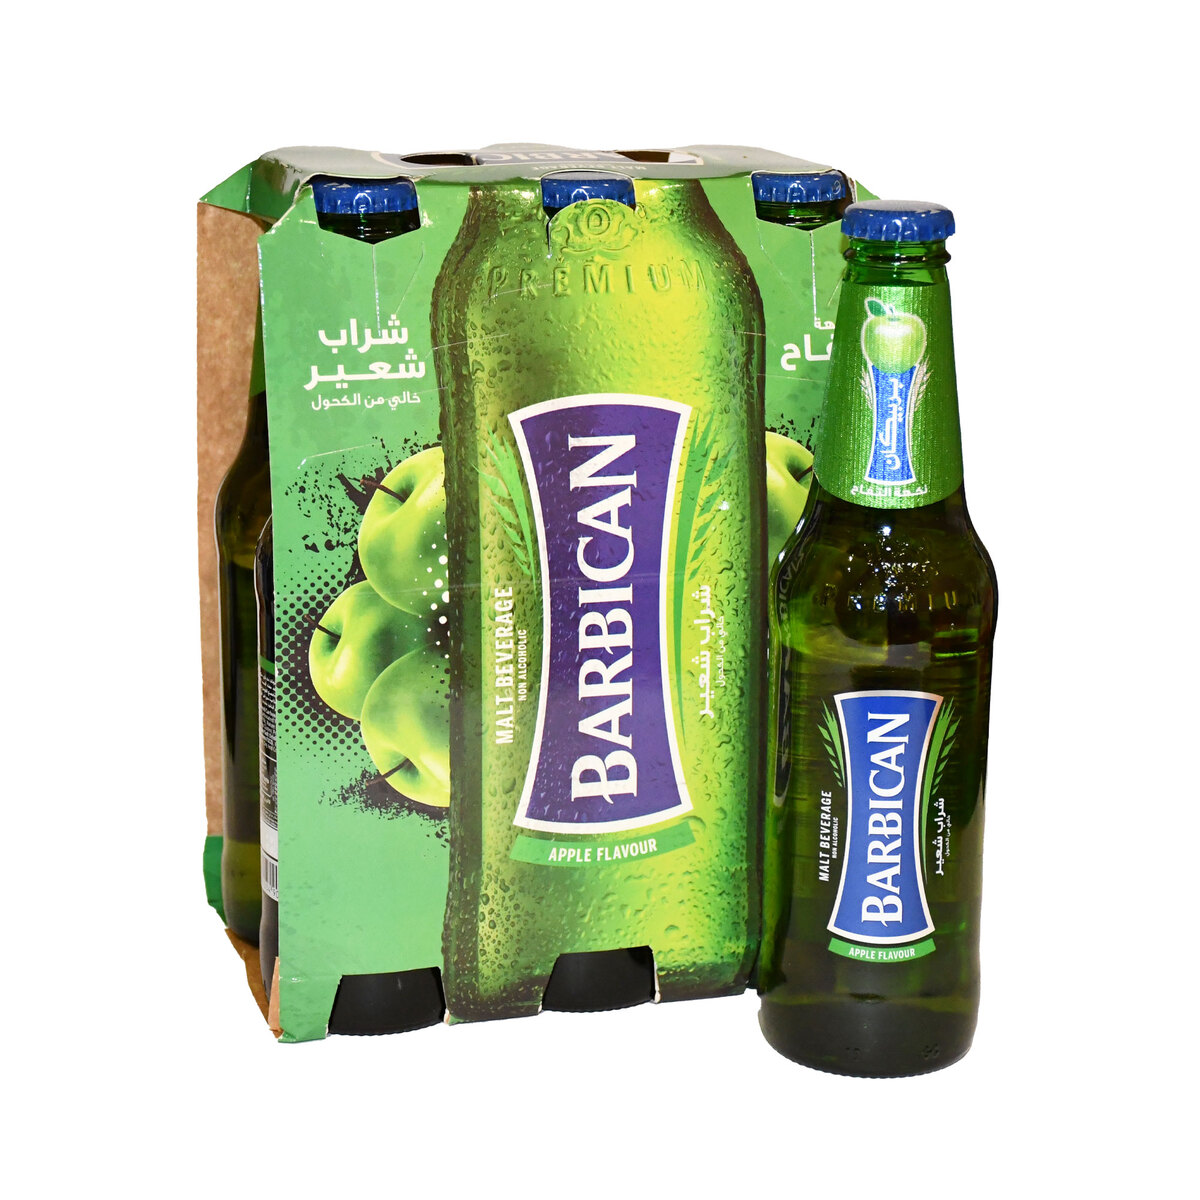 Buy Barbican Apple Flavoured Malt Beverage Non-Alcoholic Drink 6 x 325 ml Online at Best Price | Non Alcoholic Beer | Lulu Kuwait in Kuwait